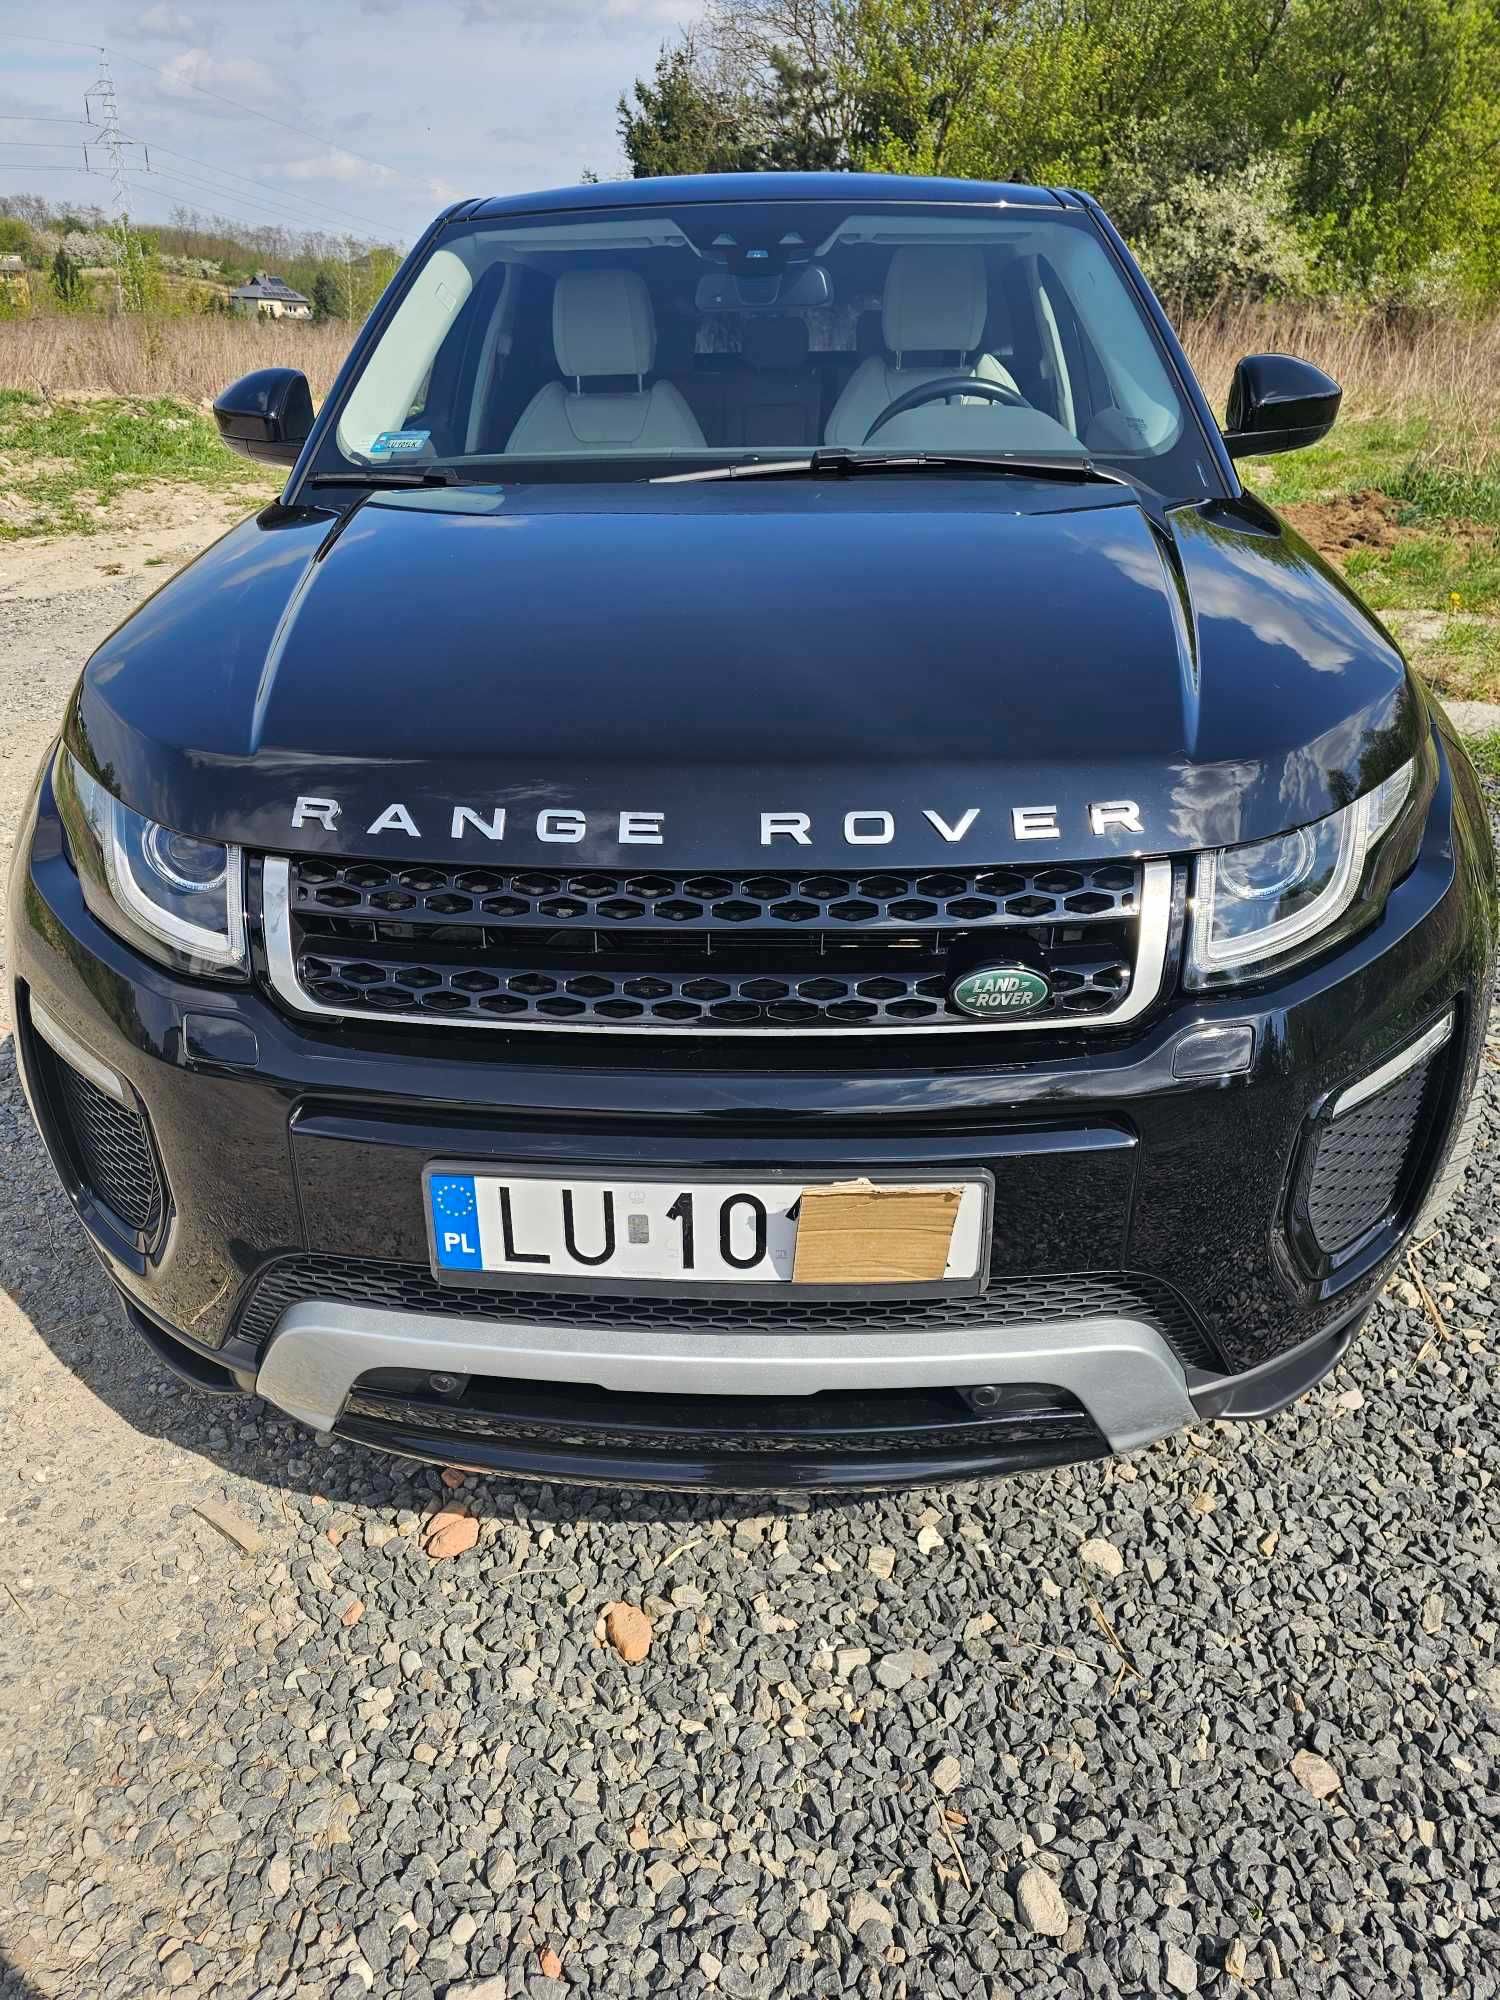 Range Rover Evoque 2.0 rok modelowy 2019